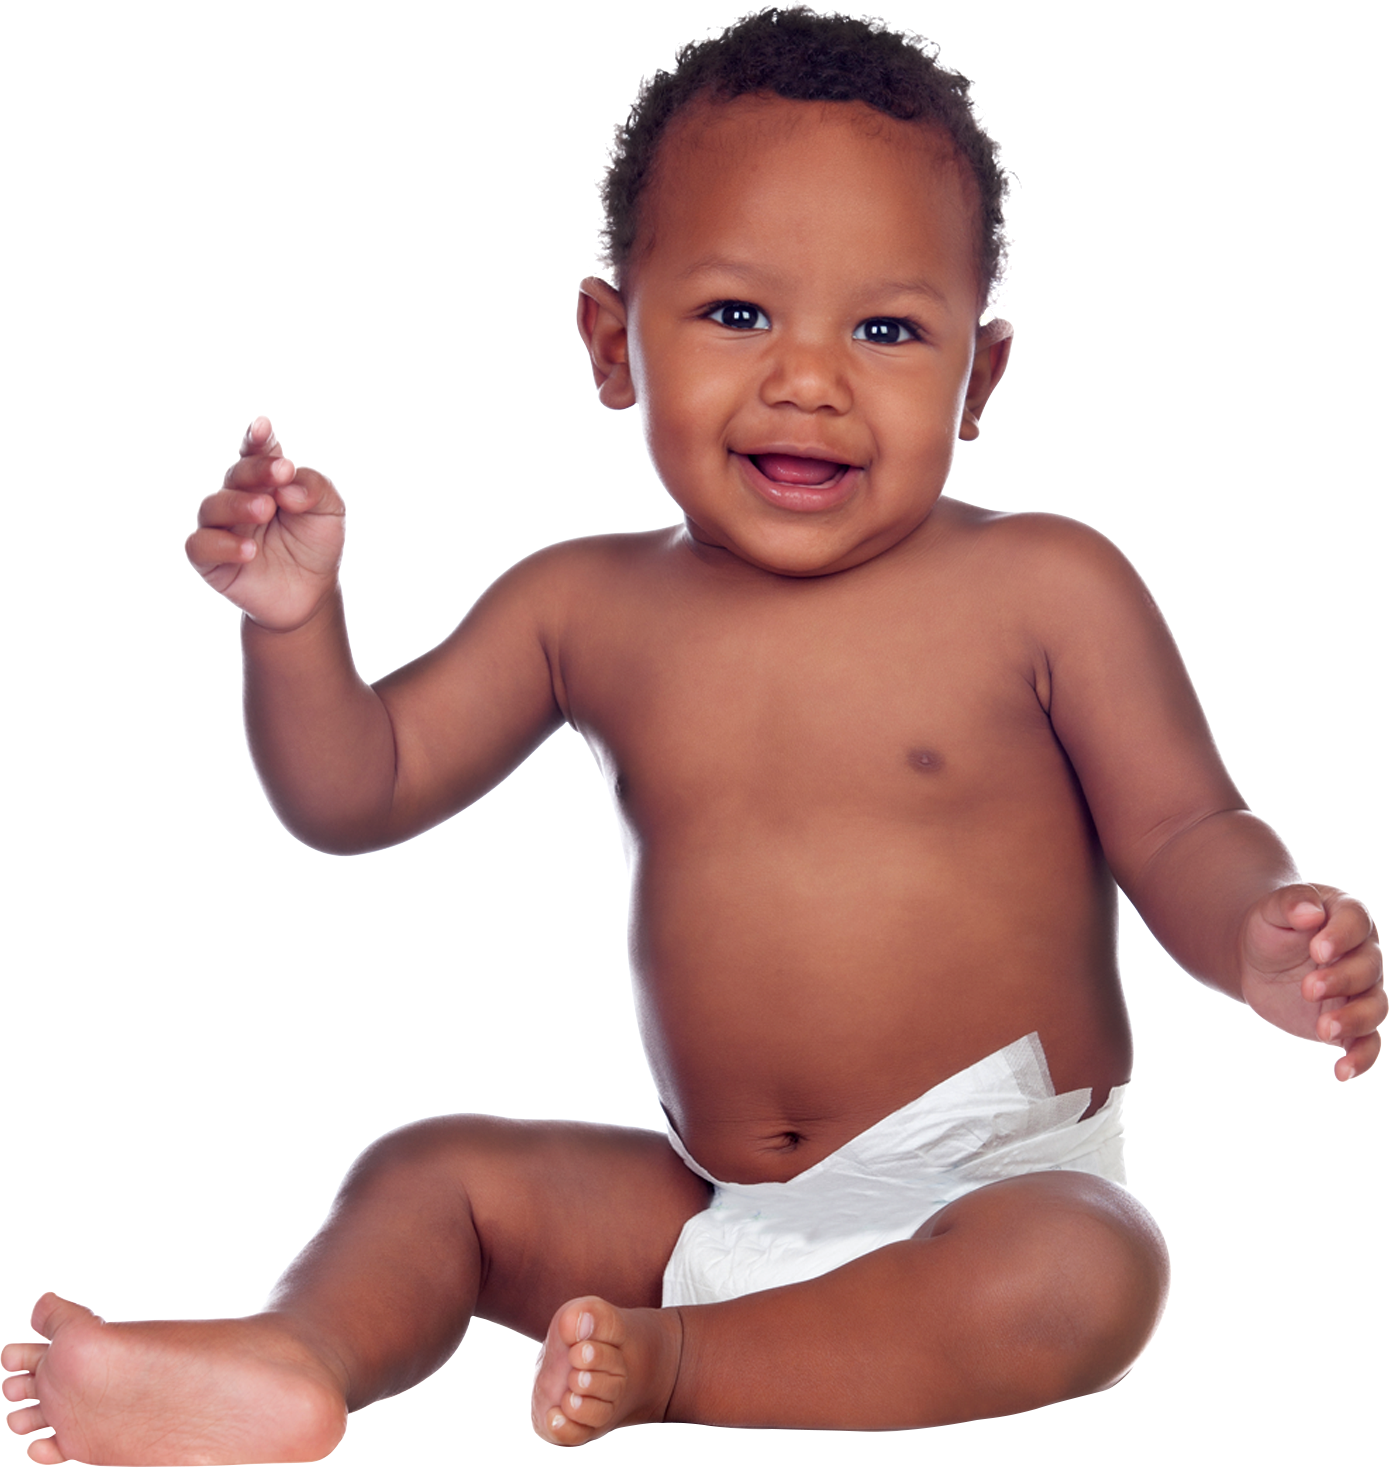 Happy Baby Smiling In Diaper